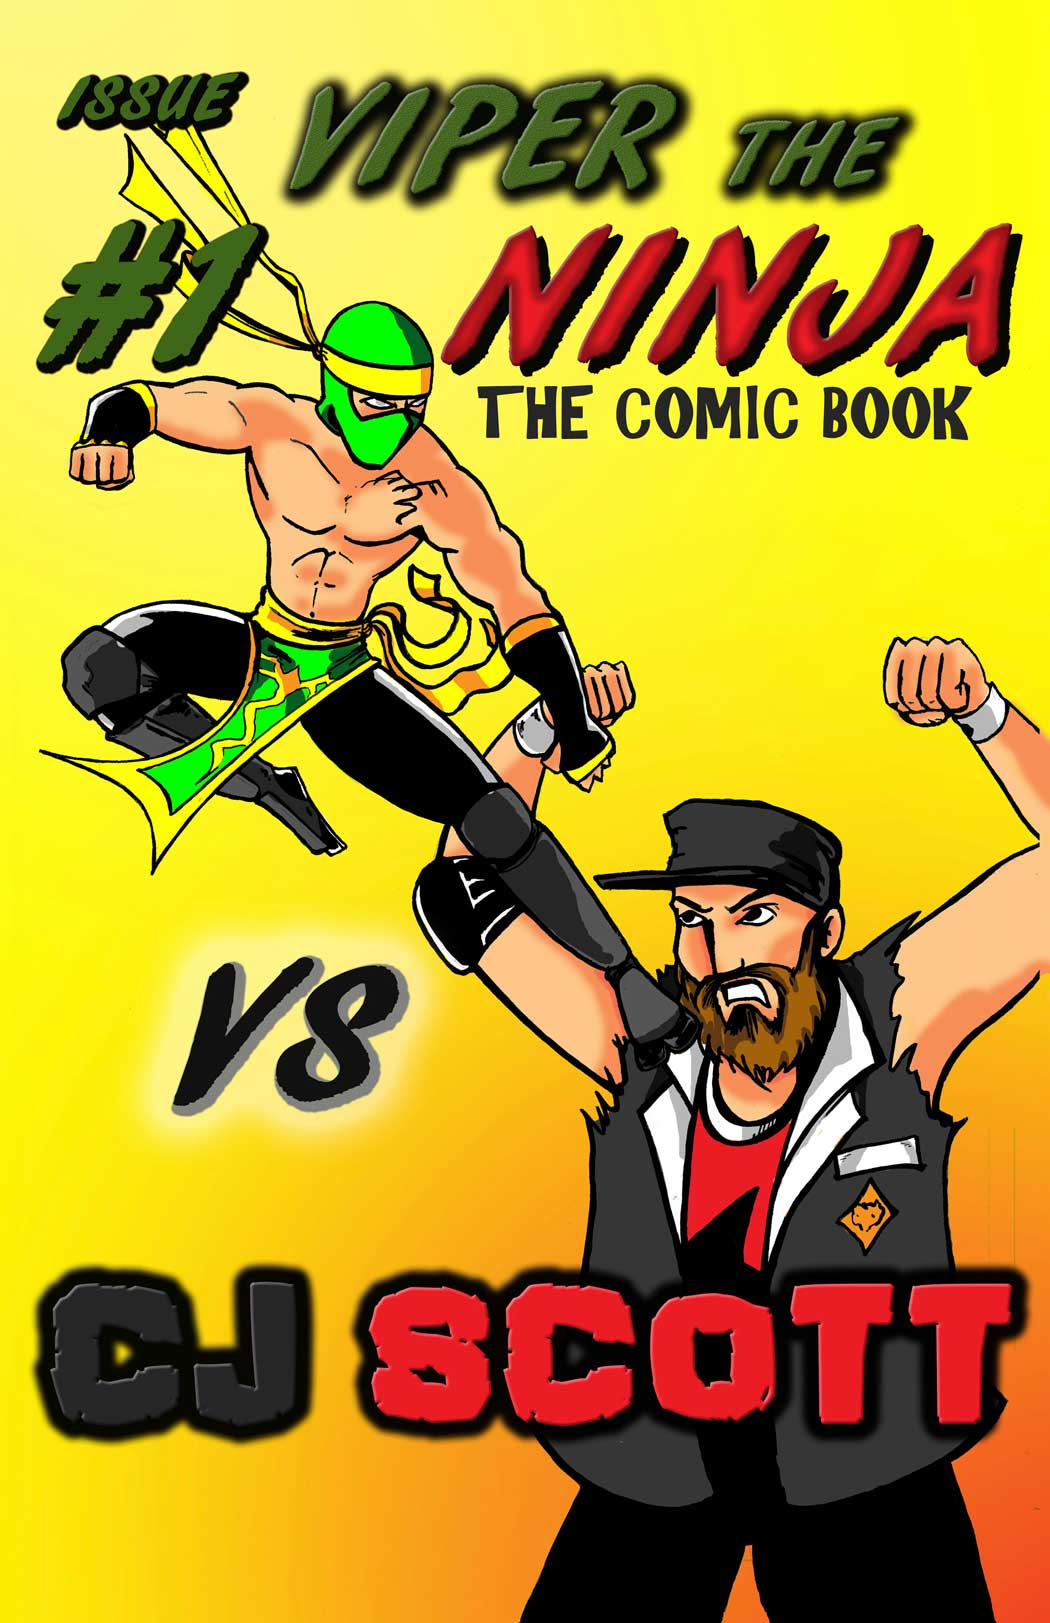 Viper the Ninja Issue #1 Cover